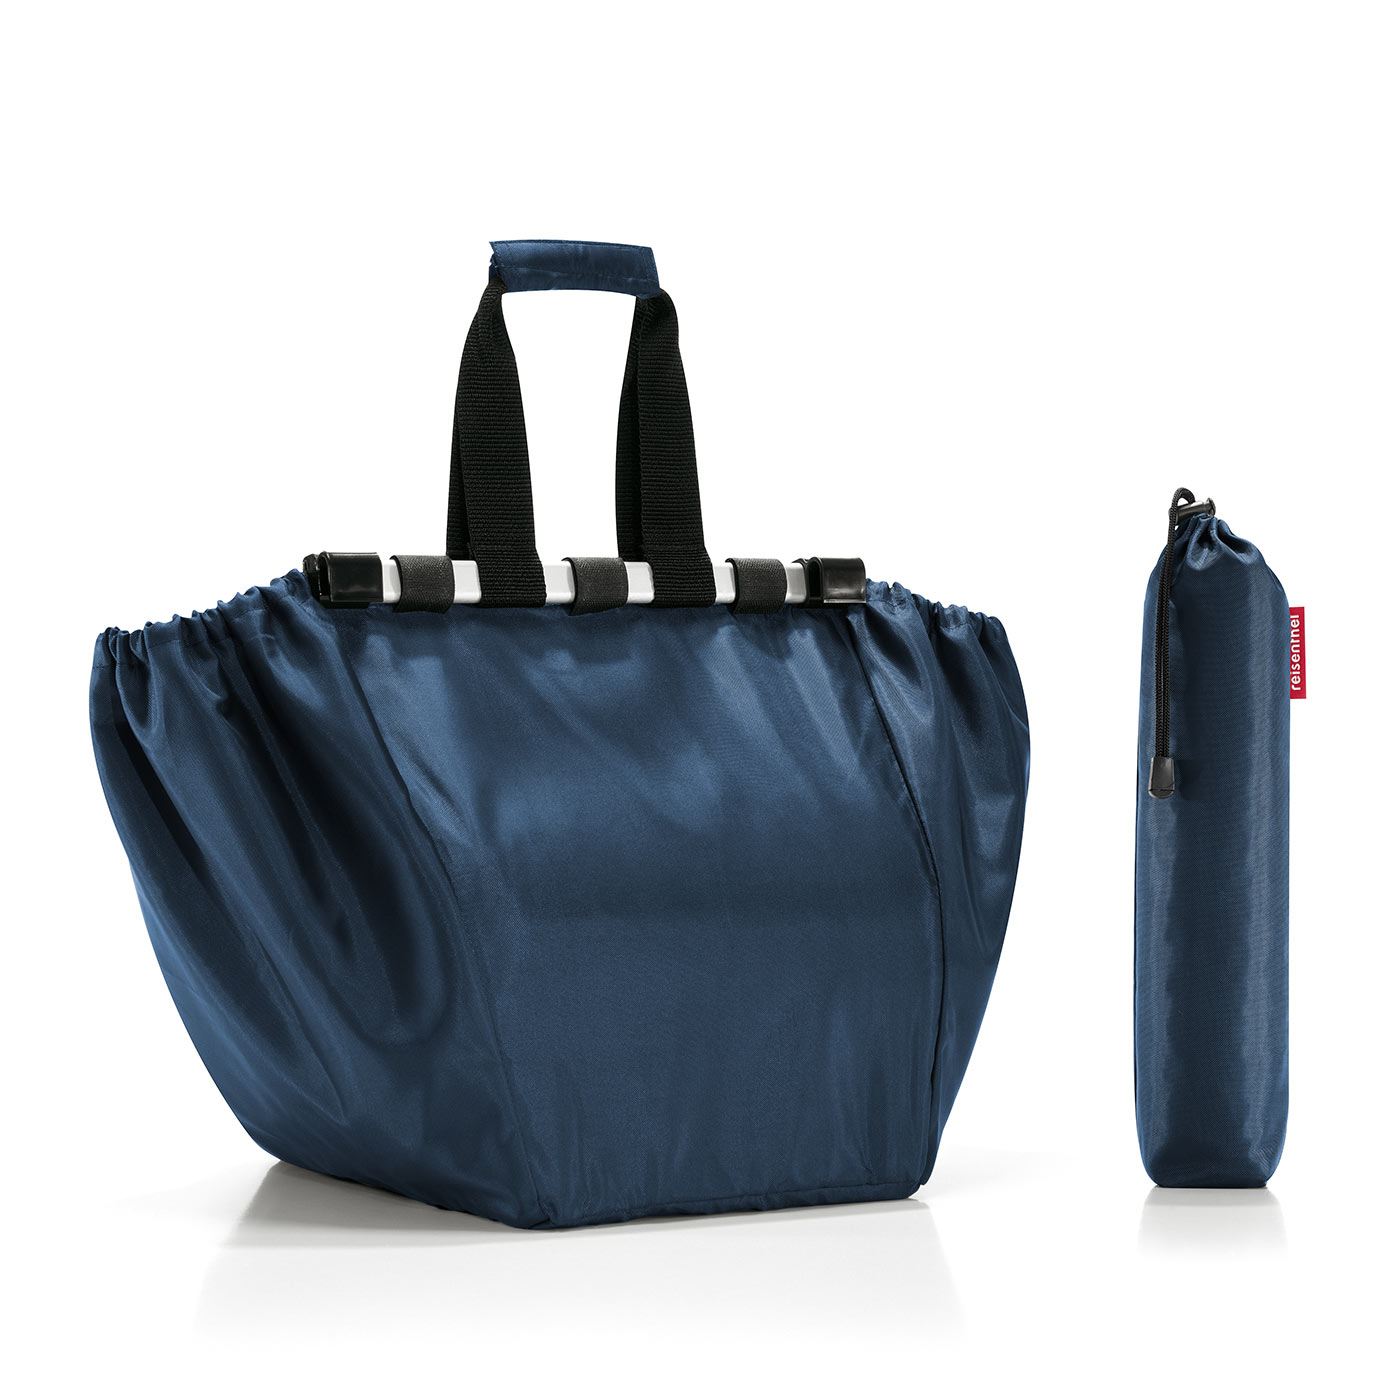 Nákupní taška Reisenthel Easyshoppingbag Dark blue